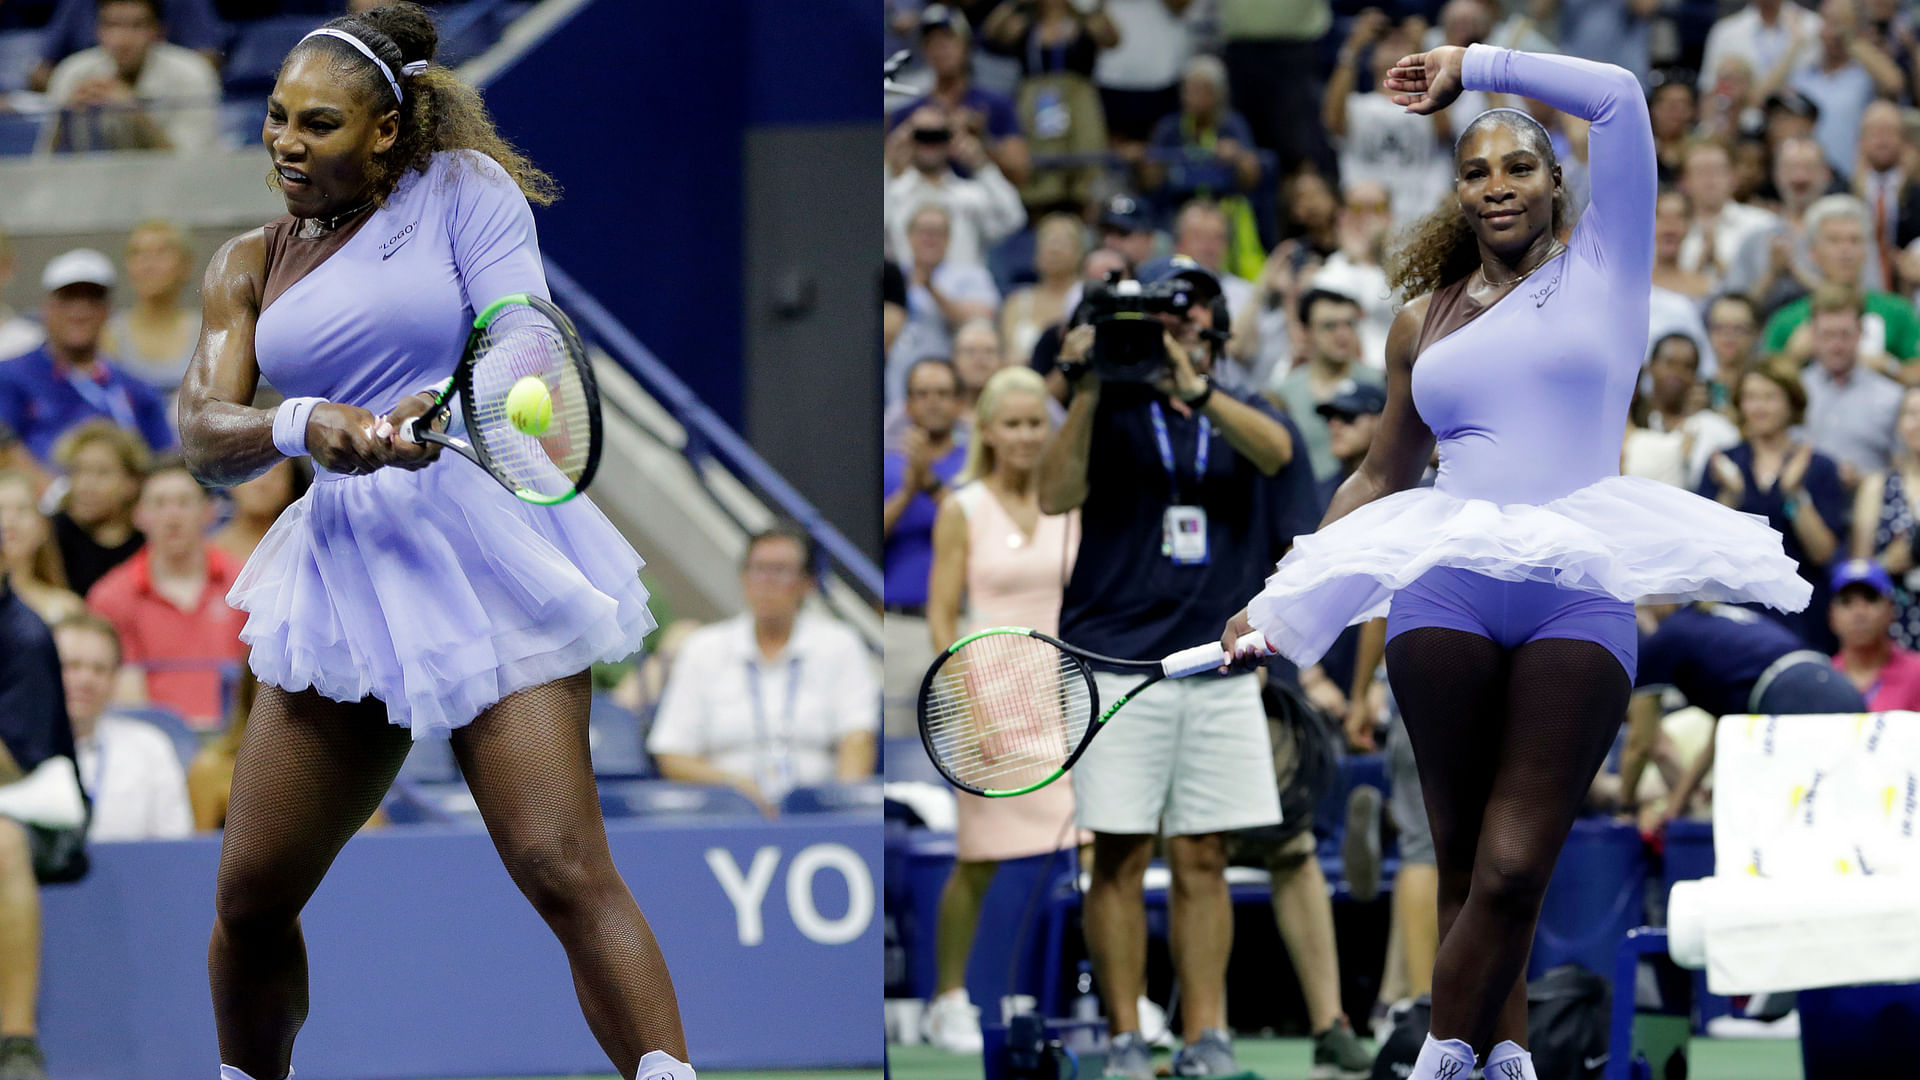 Serena Williams rocked a lavender tutu in her round 2 match.